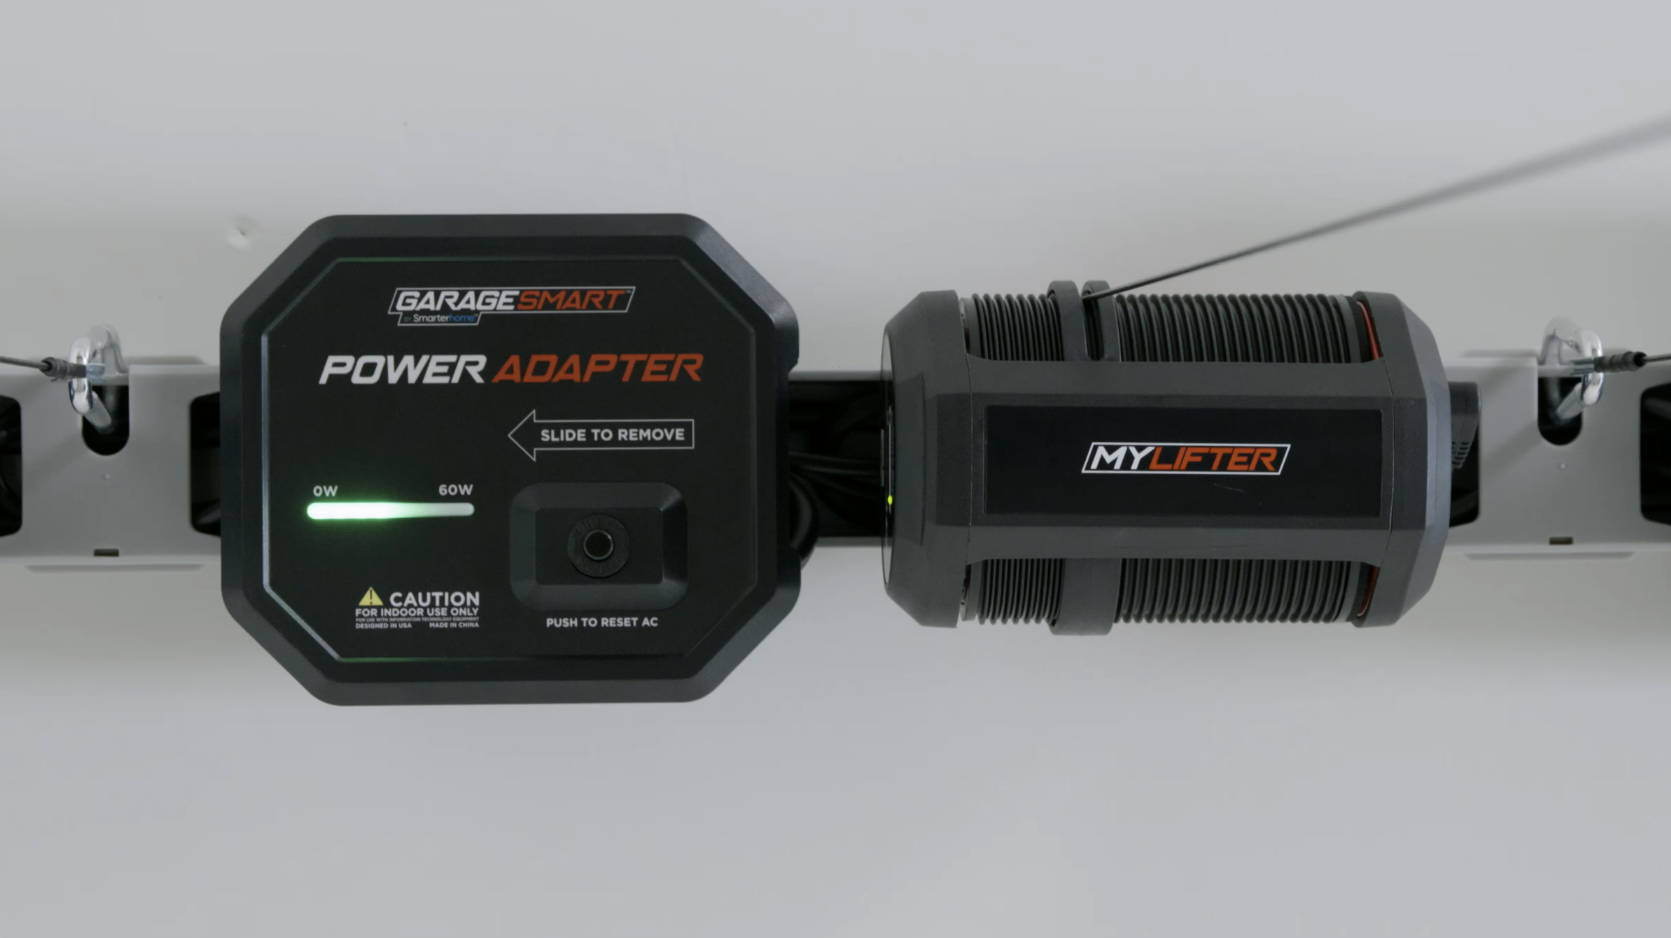 SmarterHome Power Adapter Garage Daisy-Chain Solution